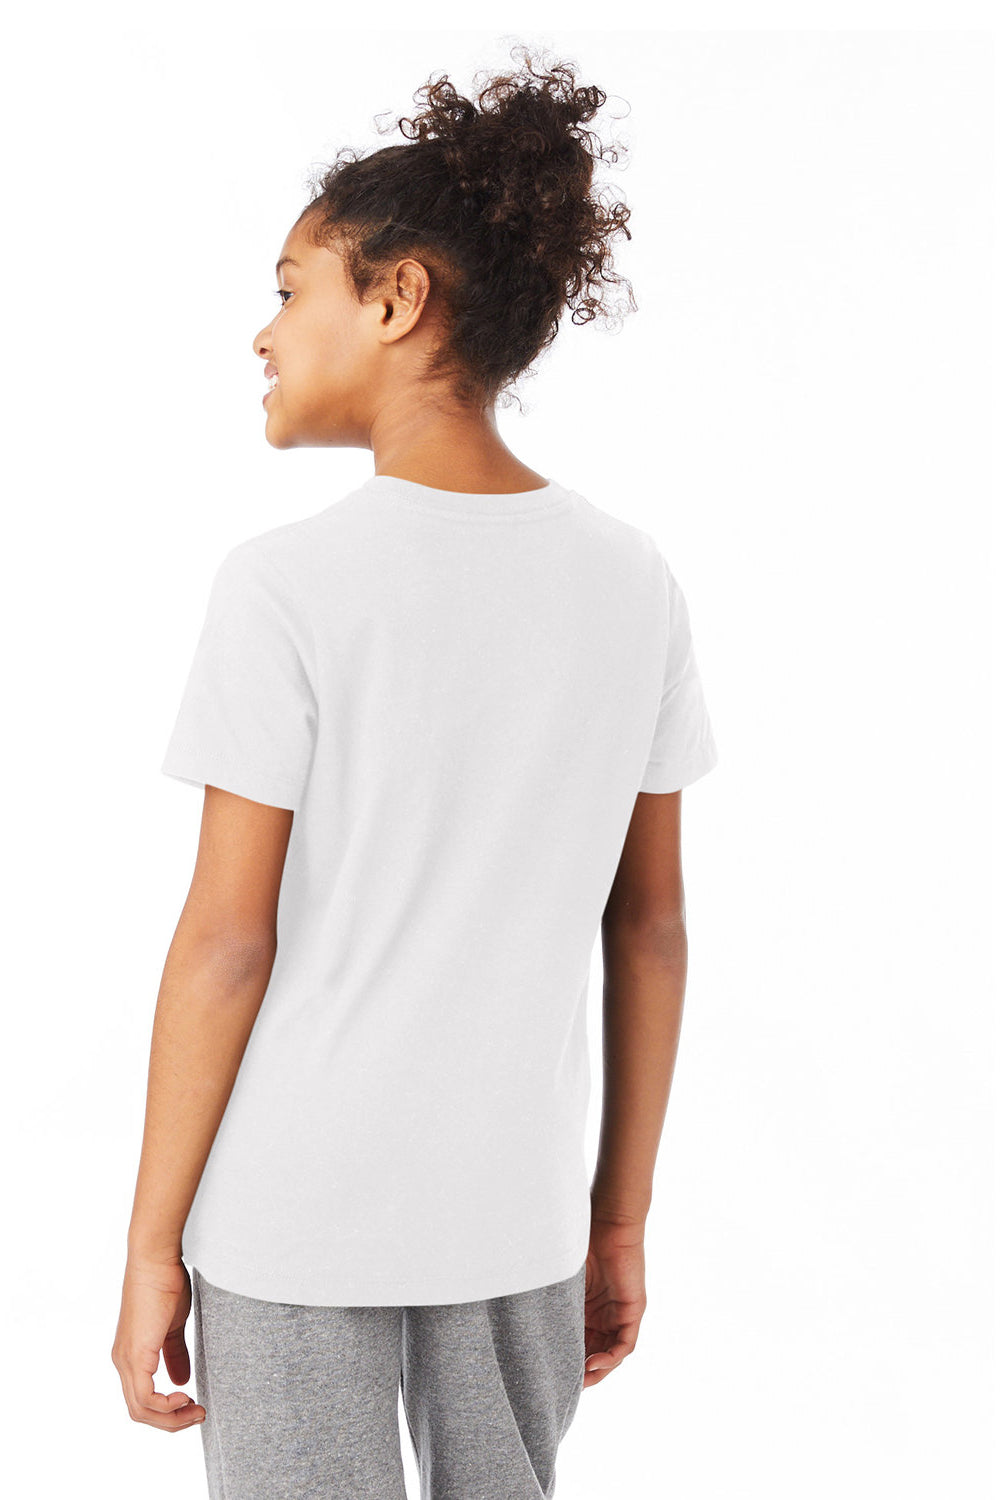 Alternative K1070 Youth Go To Short Sleeve Crewneck T-Shirt White Model Back